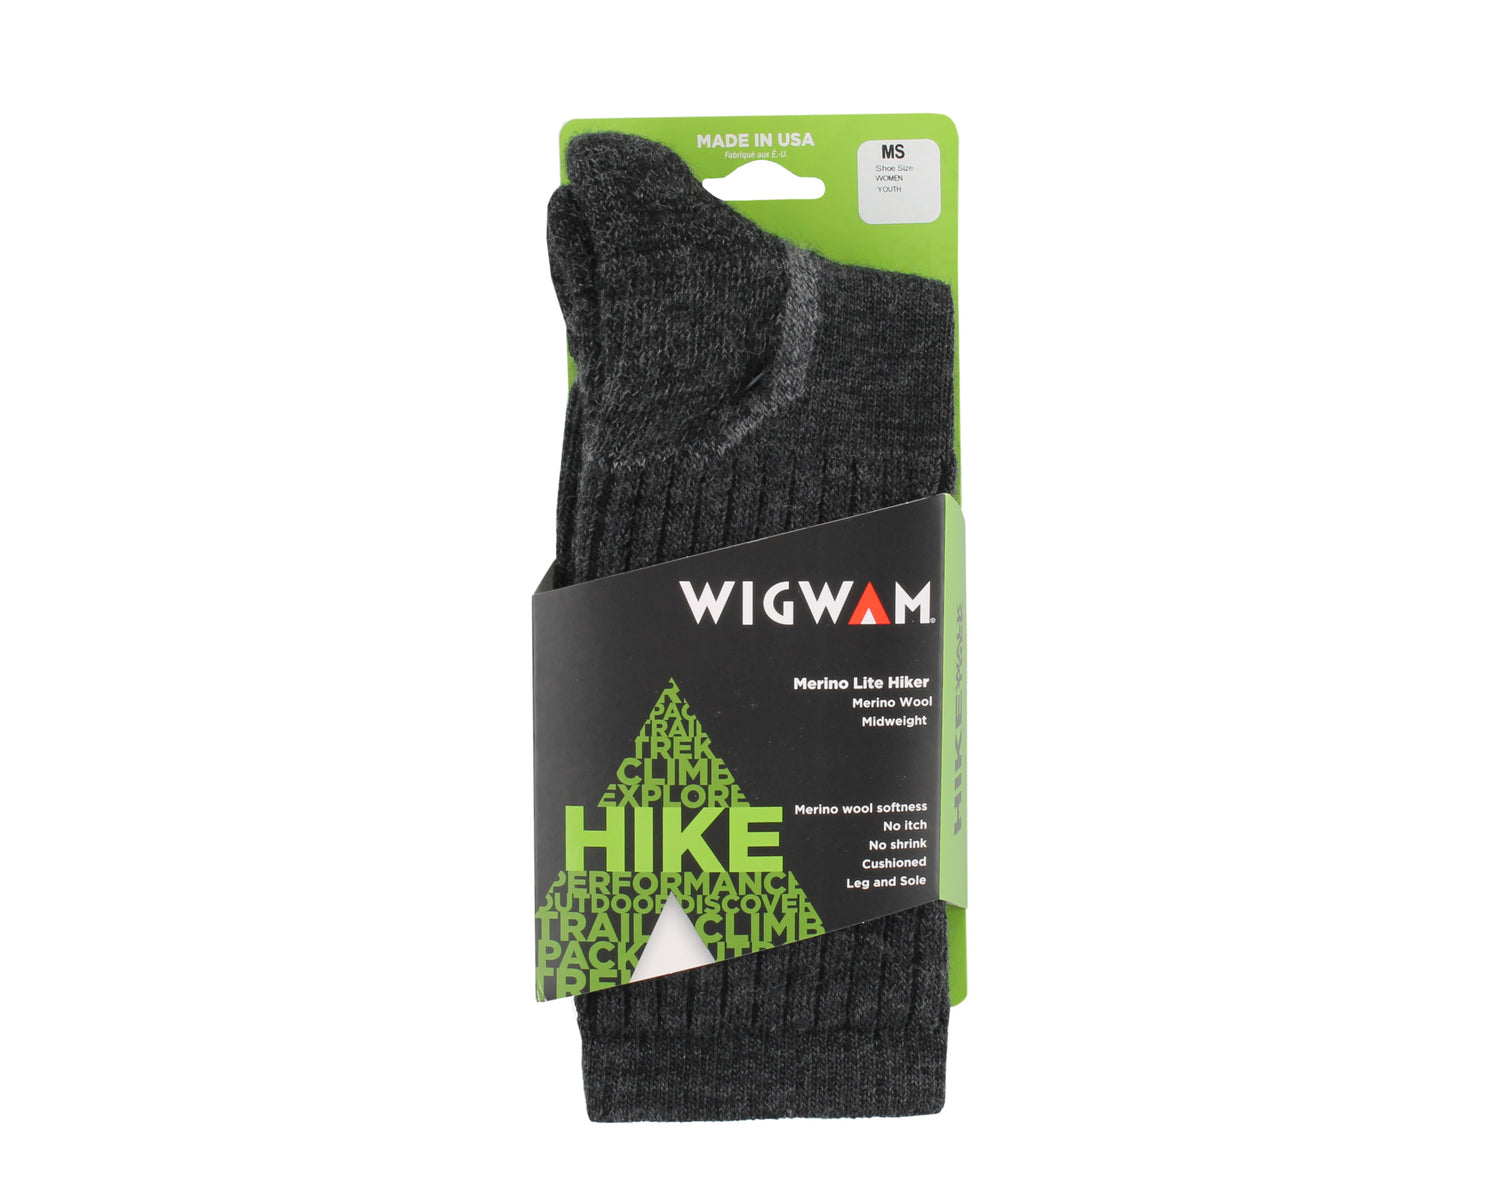 WigWam Merino Lite Hiker Crew Socks